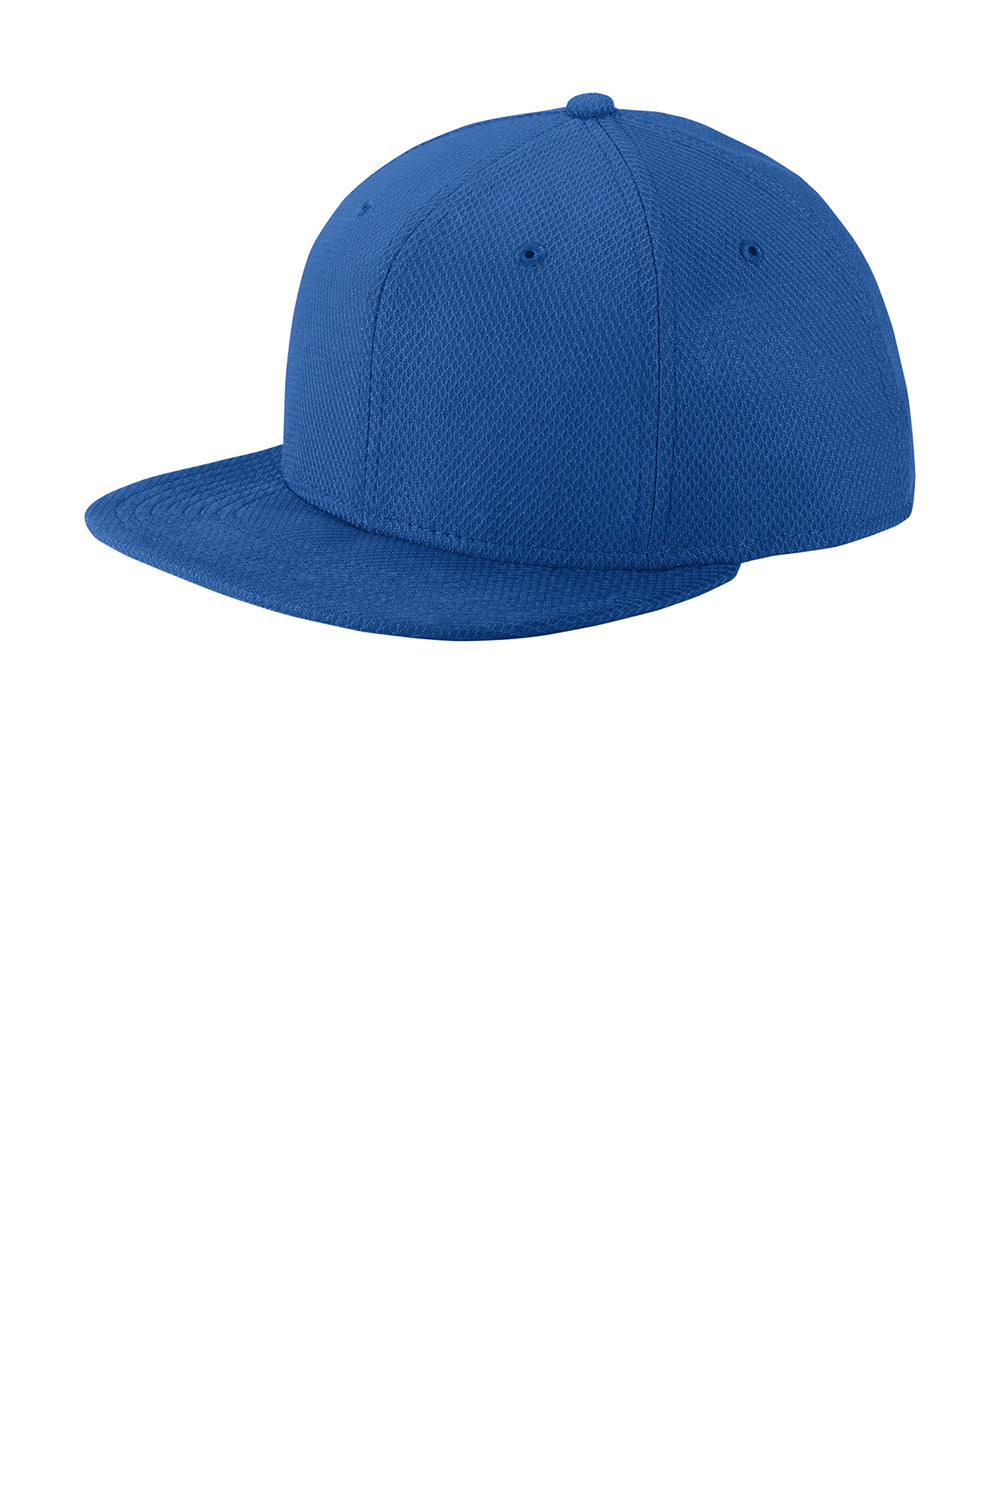 New Era NE404 Mens Moisture Wicking Adjustable Hat Royal Blue Front